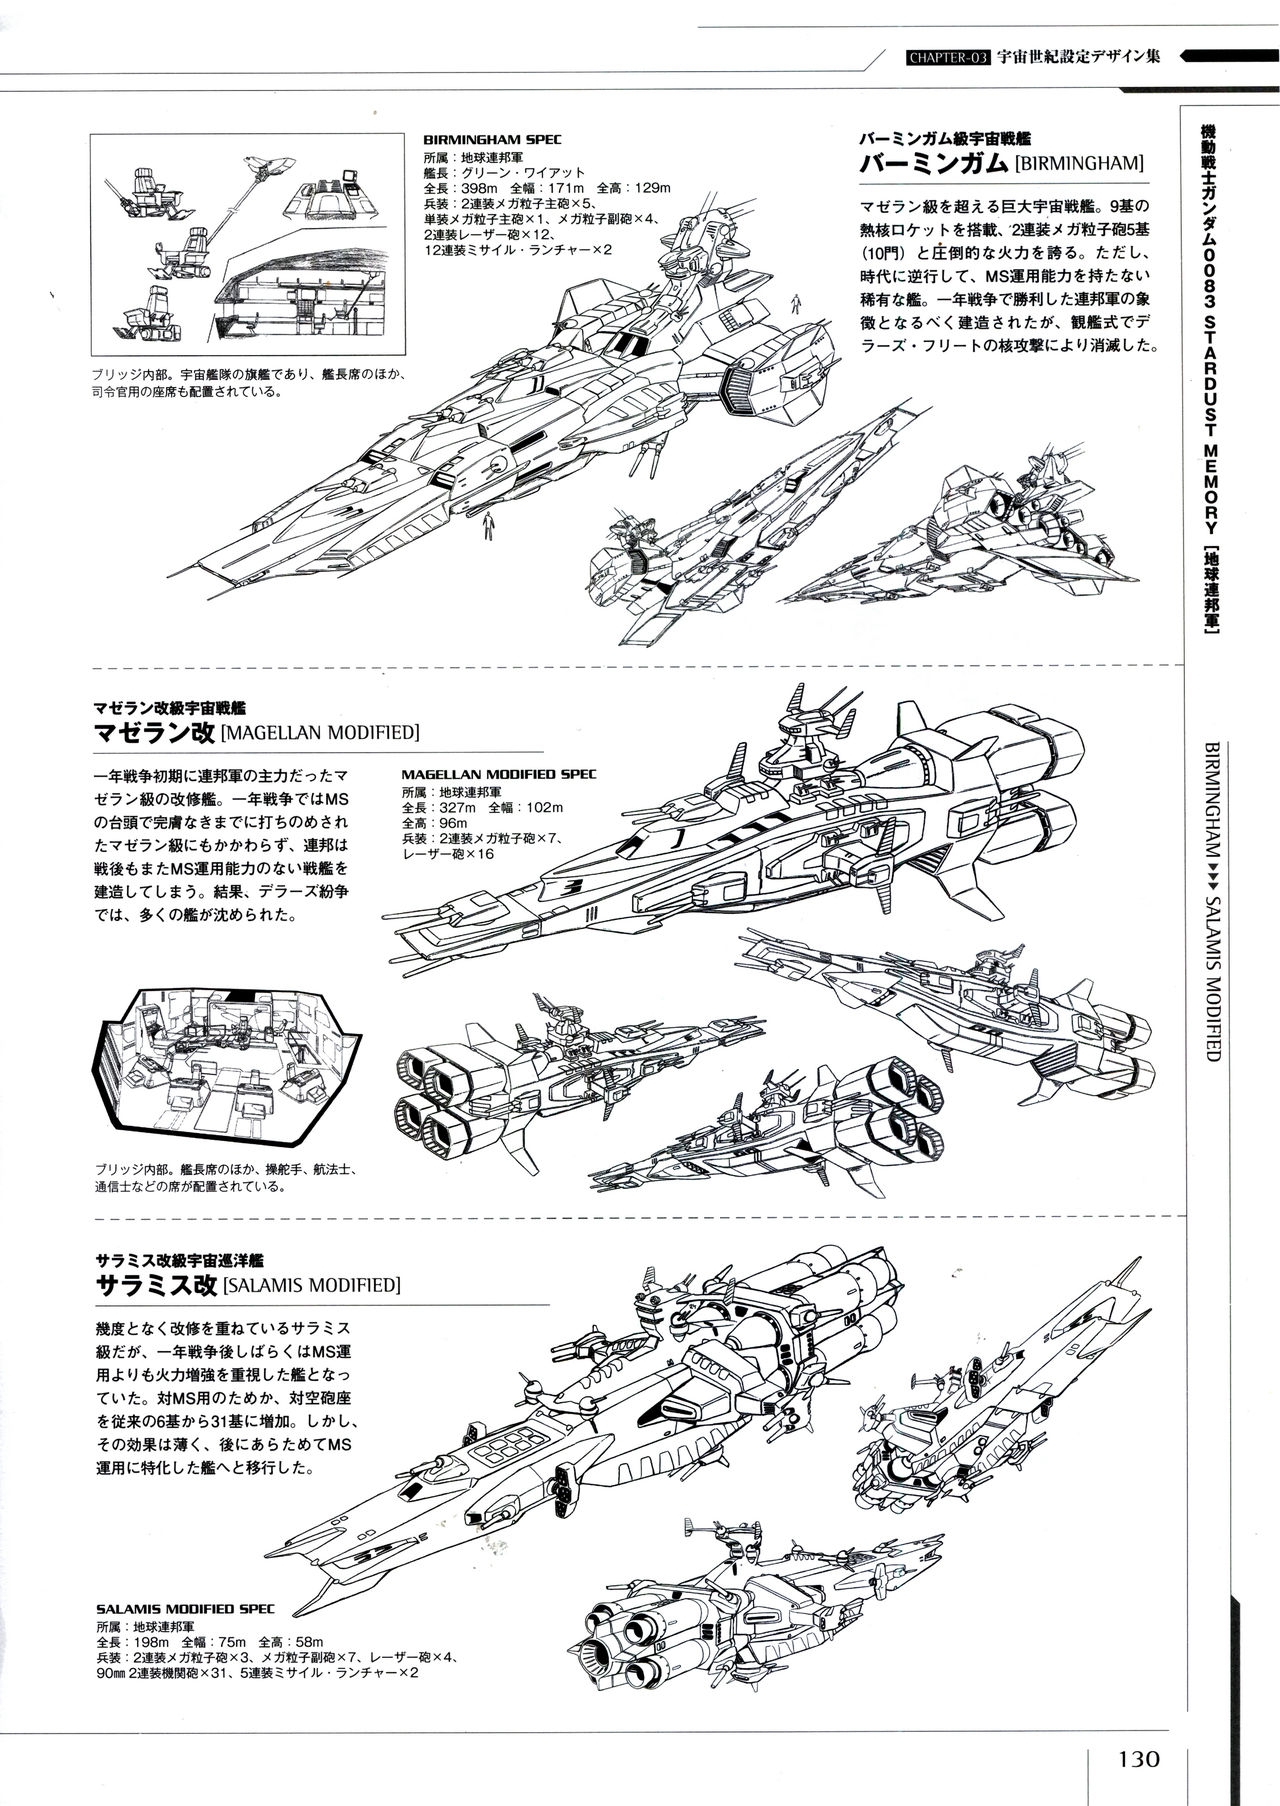 Mobile Suit Gundam - Ship & Aerospace Plane Encyclopedia - Revised Edition 135